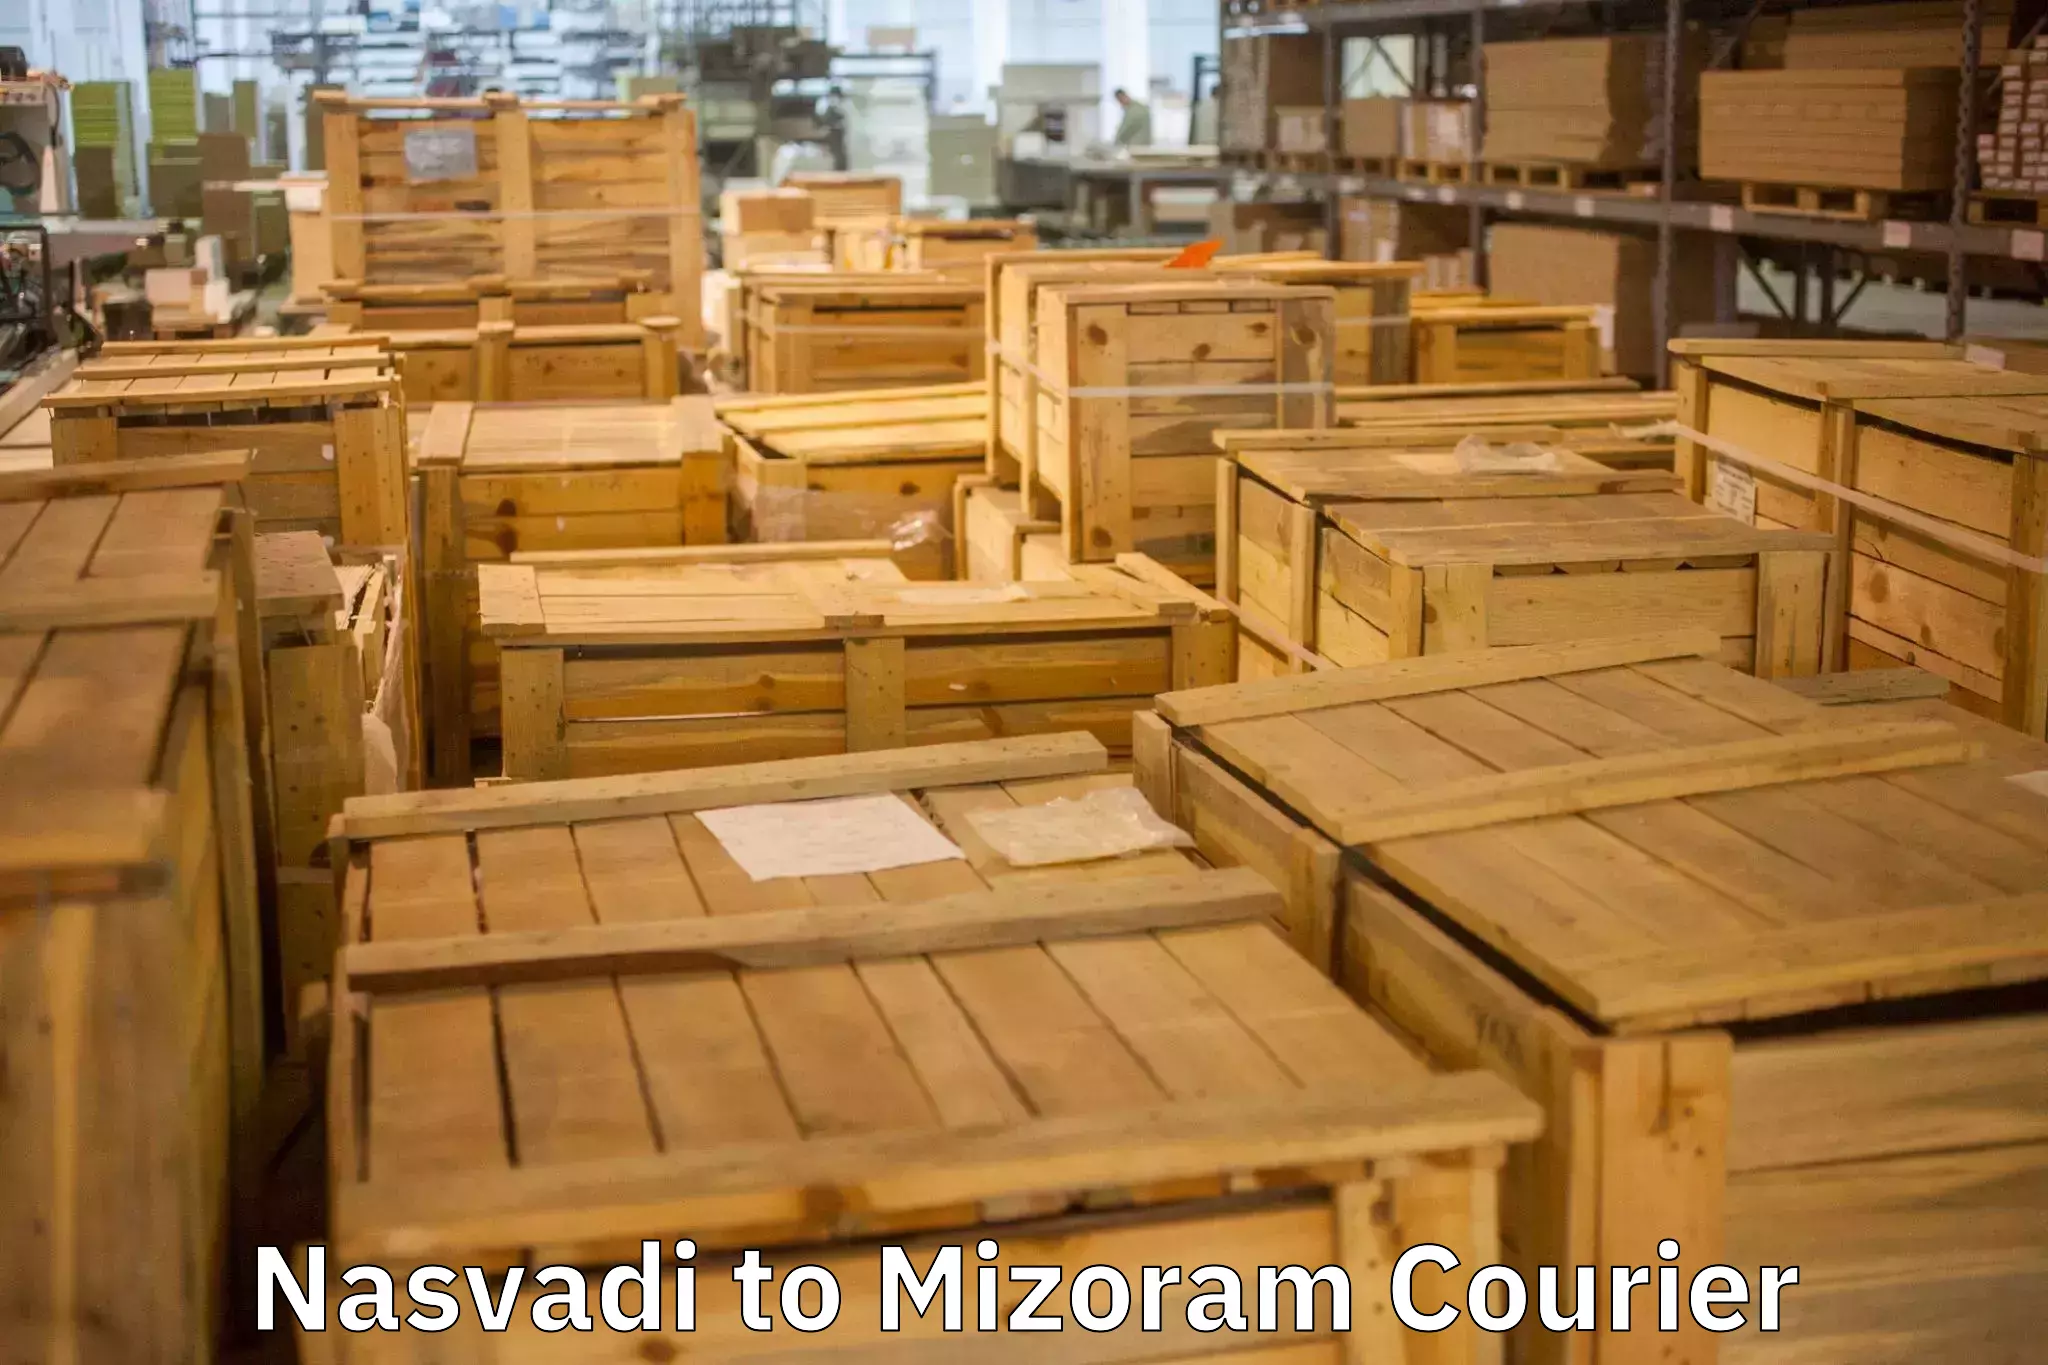 Quality moving company in Nasvadi to Mizoram